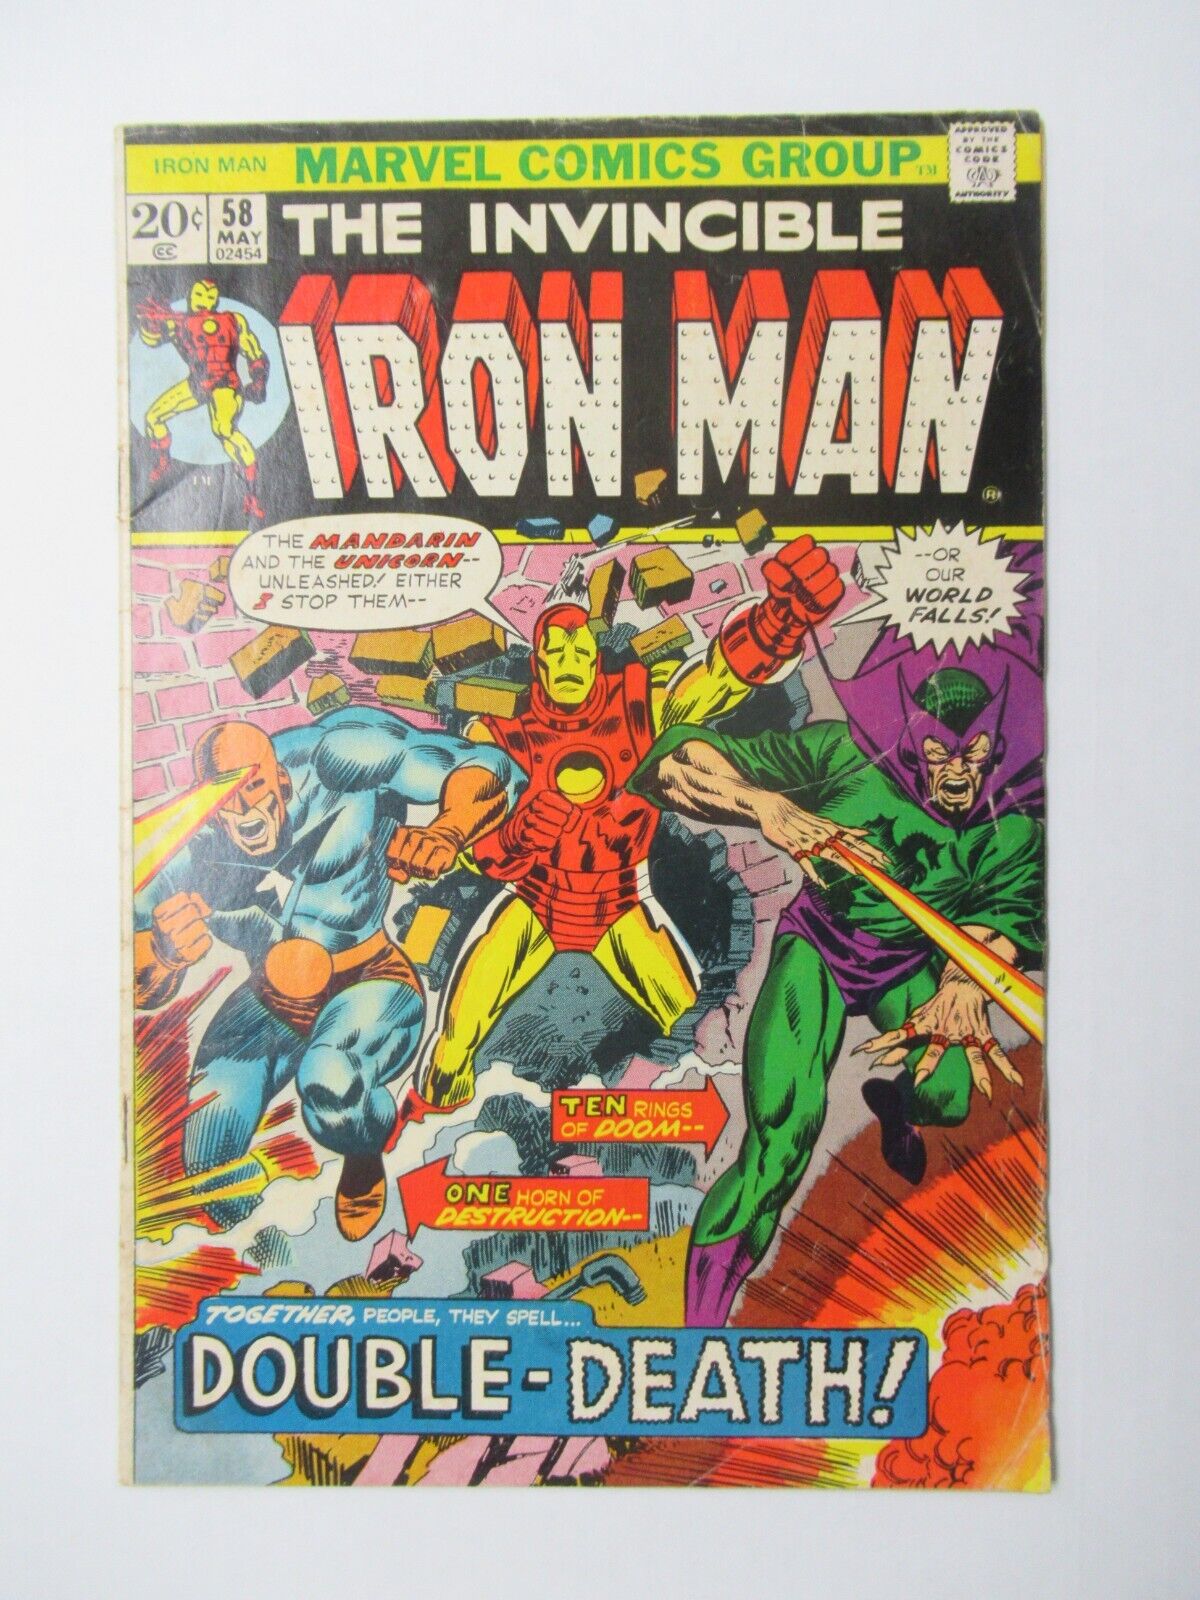 1973 Marvel Comics The Invincible Iron Man #58